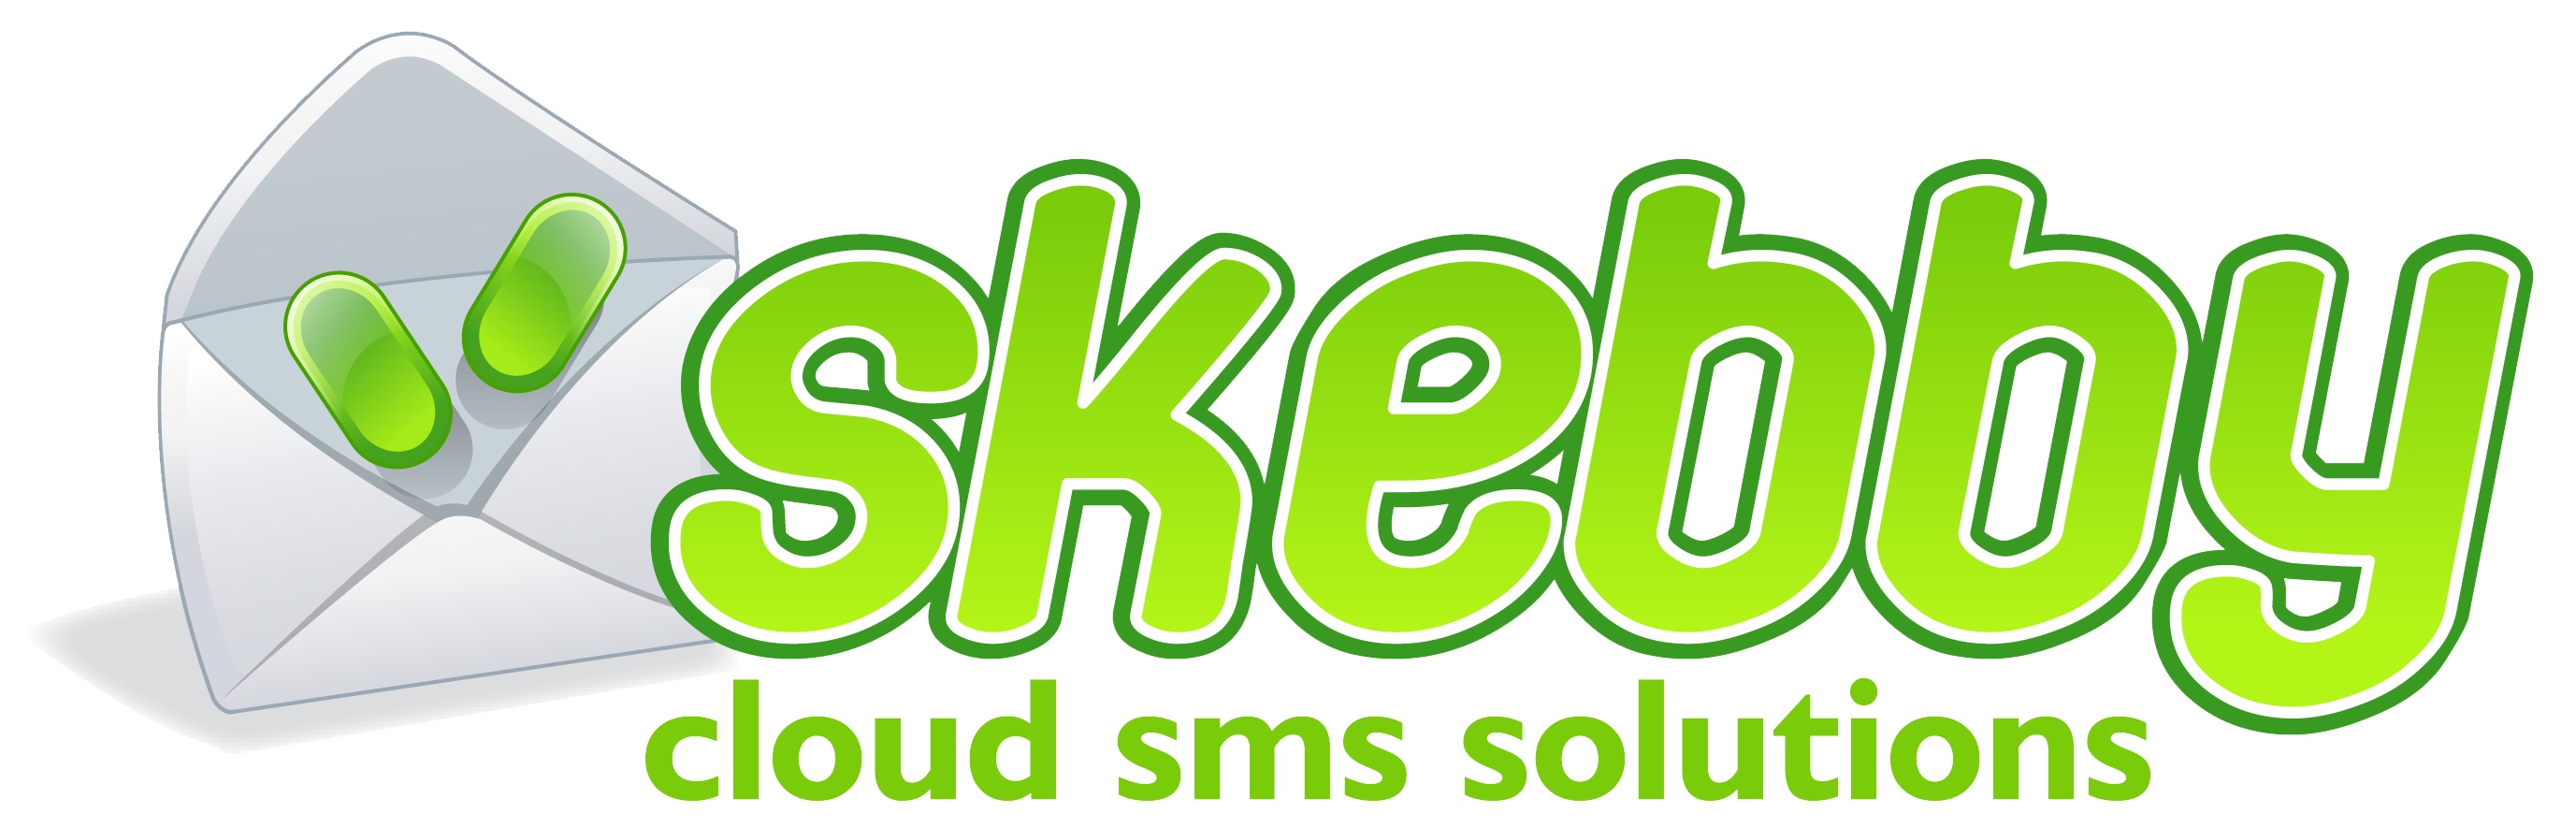 Sms link. FREESM. SMS 3d. Ericsson logo.